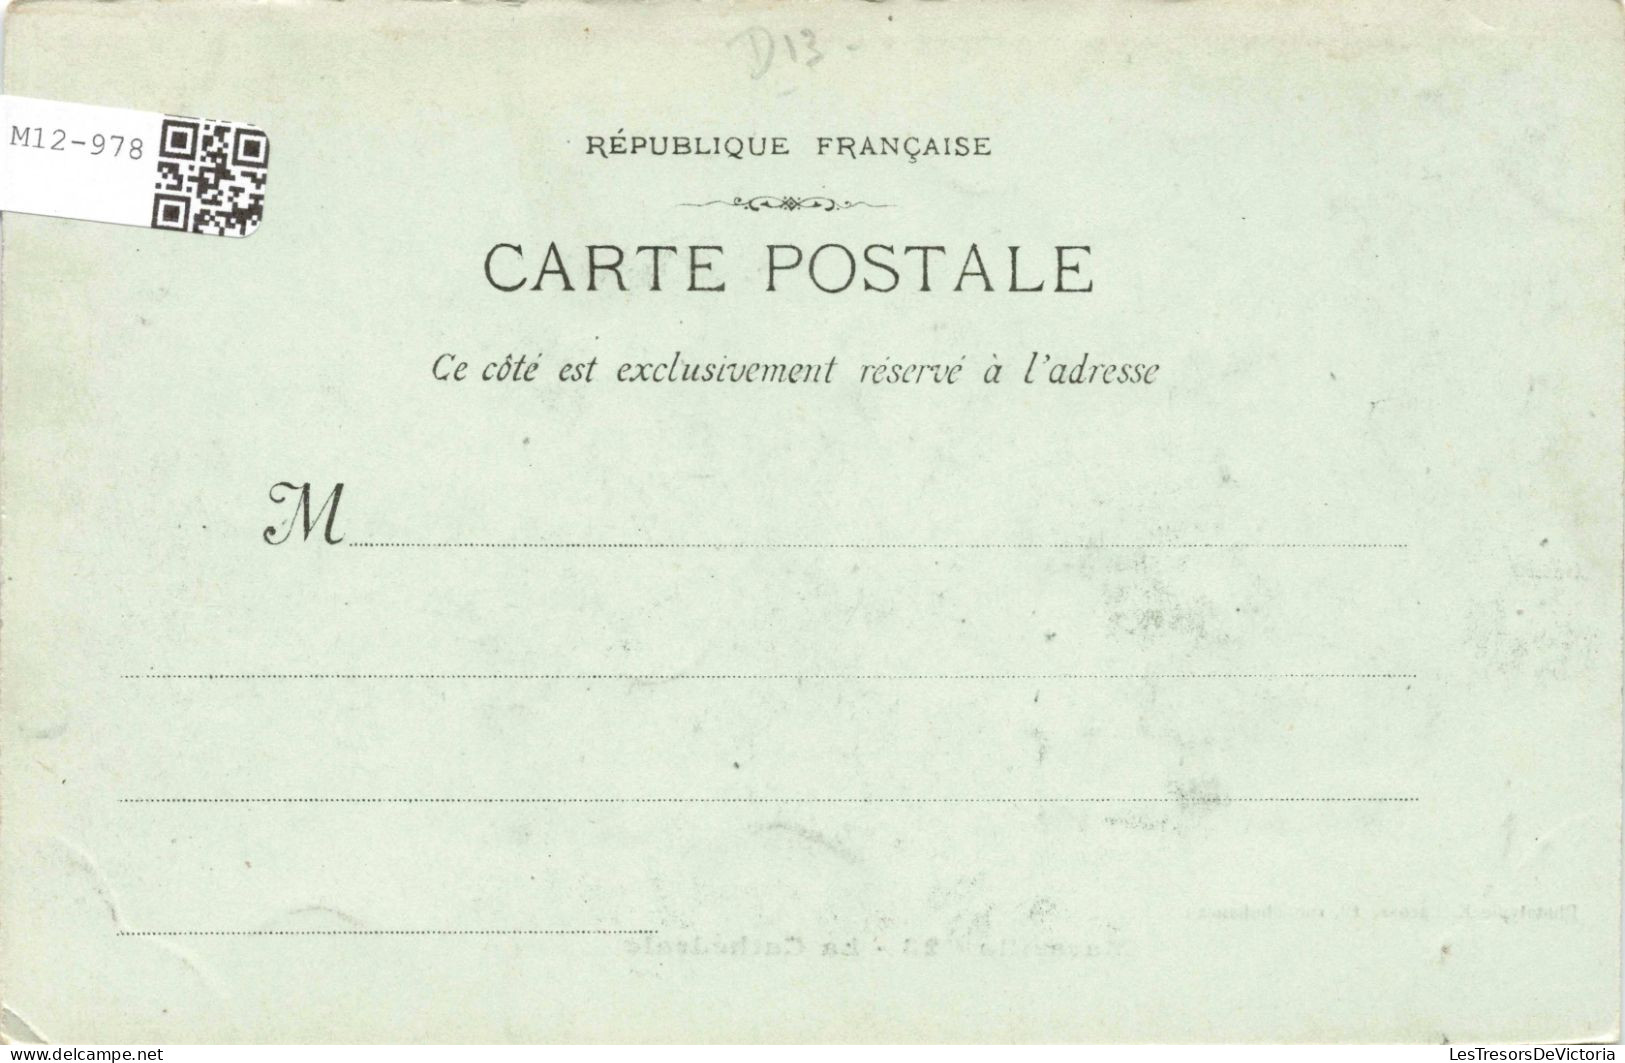 FRANCE - Marseille - La Cathédrale - Carte Postale Ancienne - Sonstige Sehenswürdigkeiten